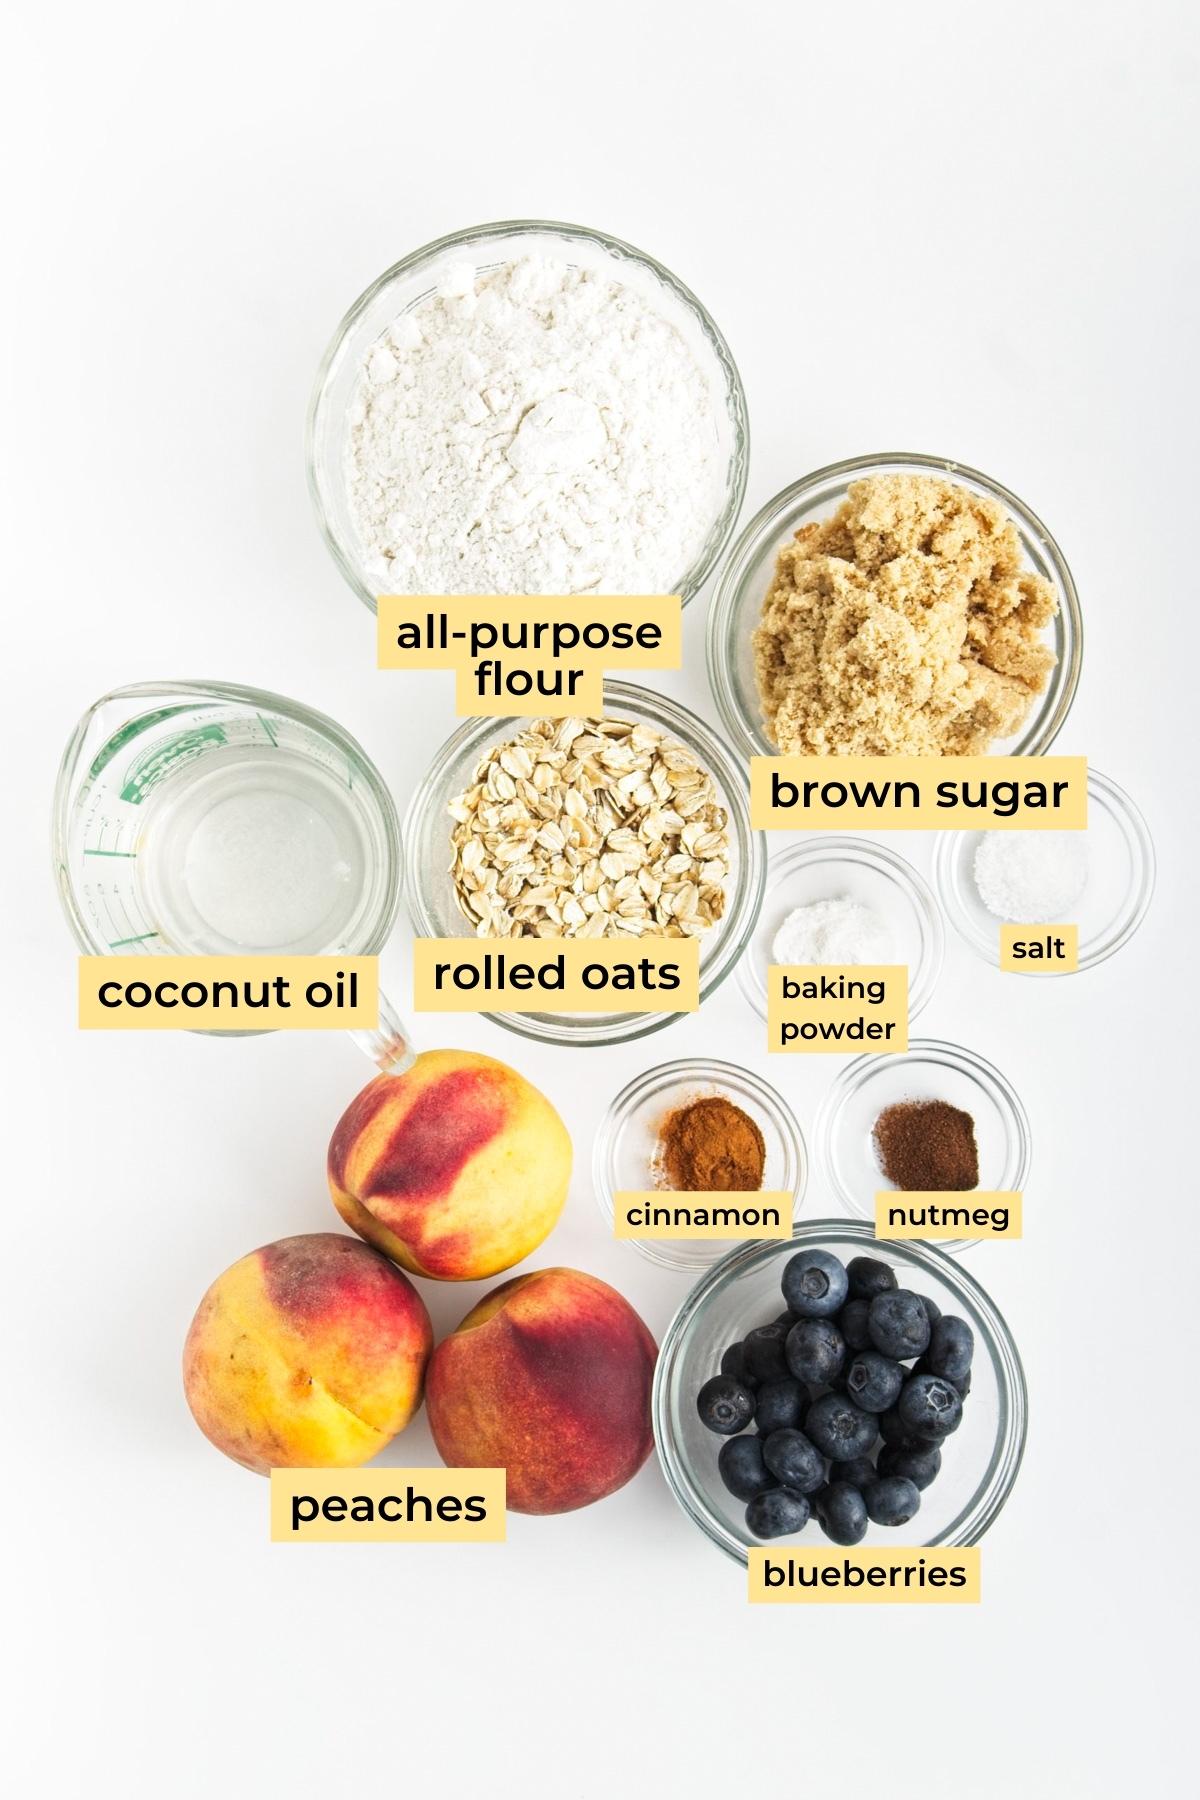 Ingredients: all-purpose flour, coconut oil, brown sugar, rolled oats, baking powder, salt, cinnamon, nutmeg, blueberries and peaches.